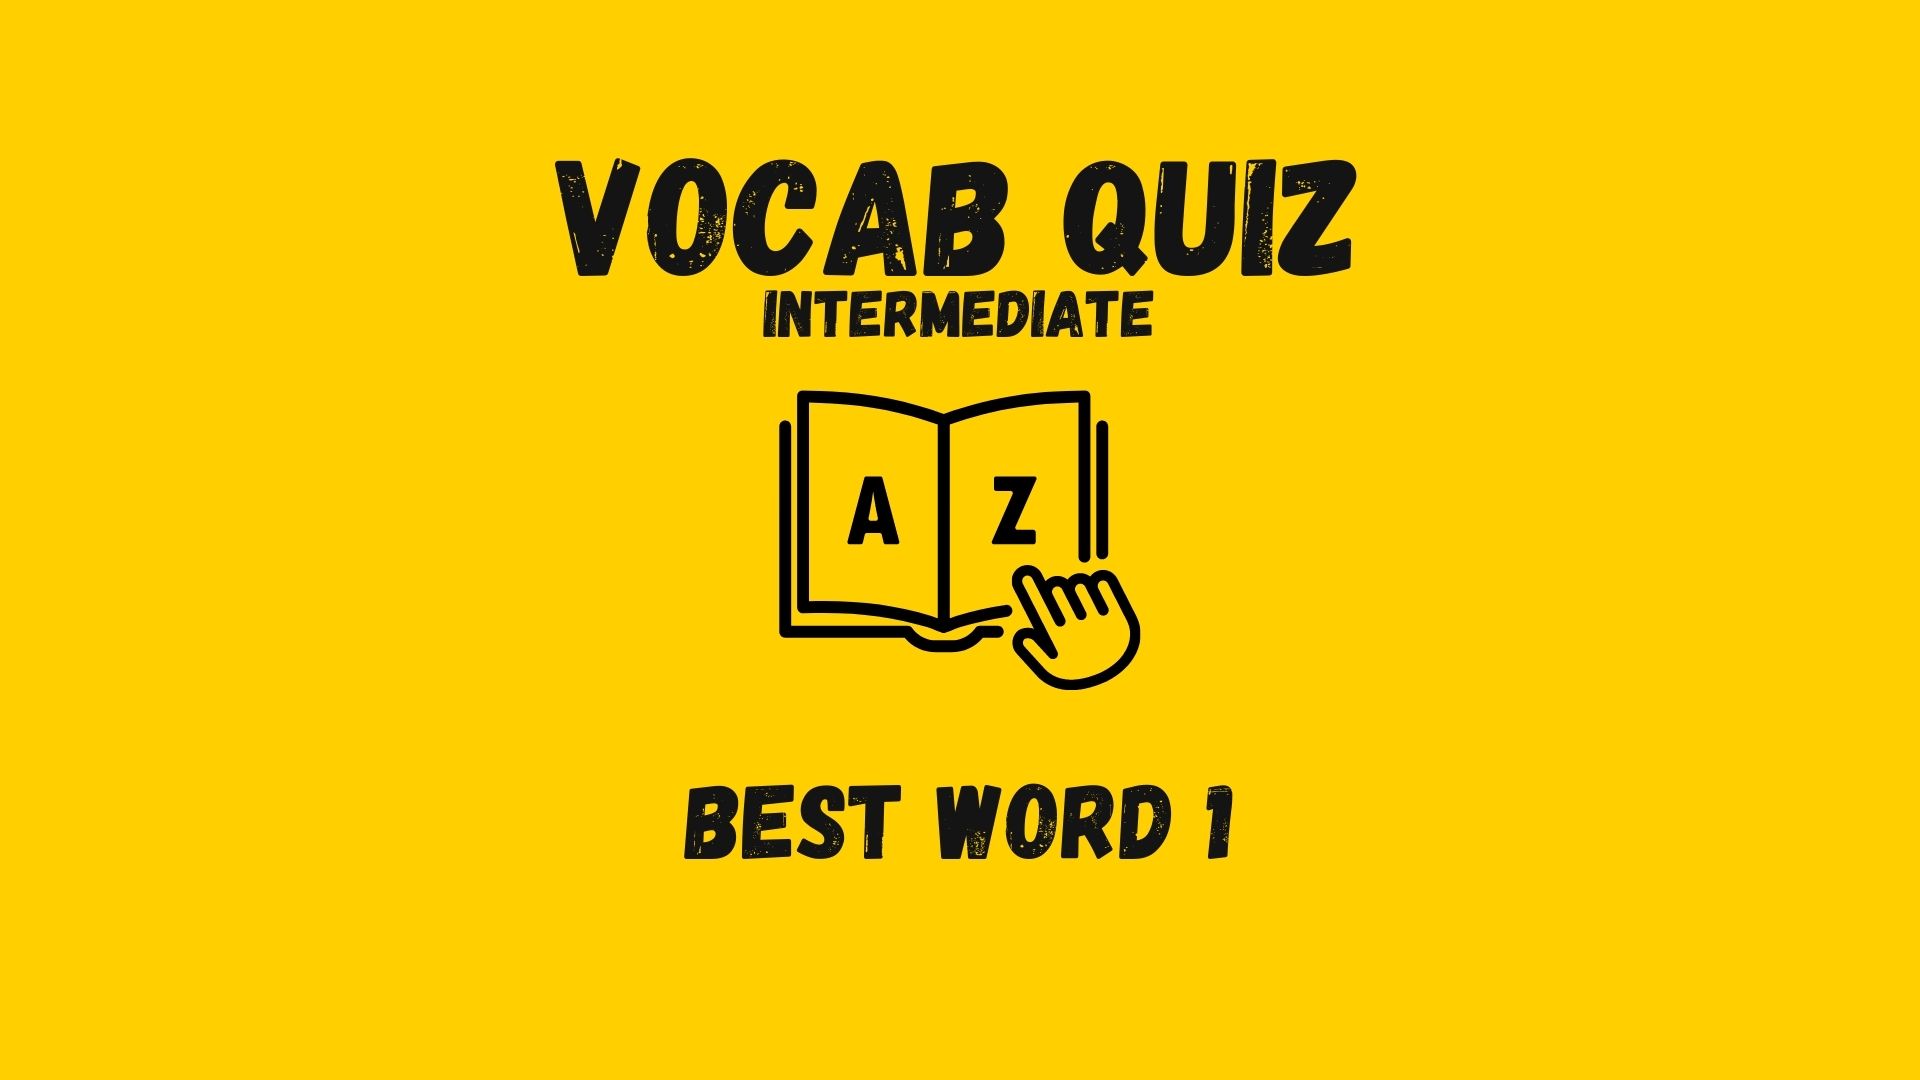 Vocabulary Quiz Intermediate Best Word 1